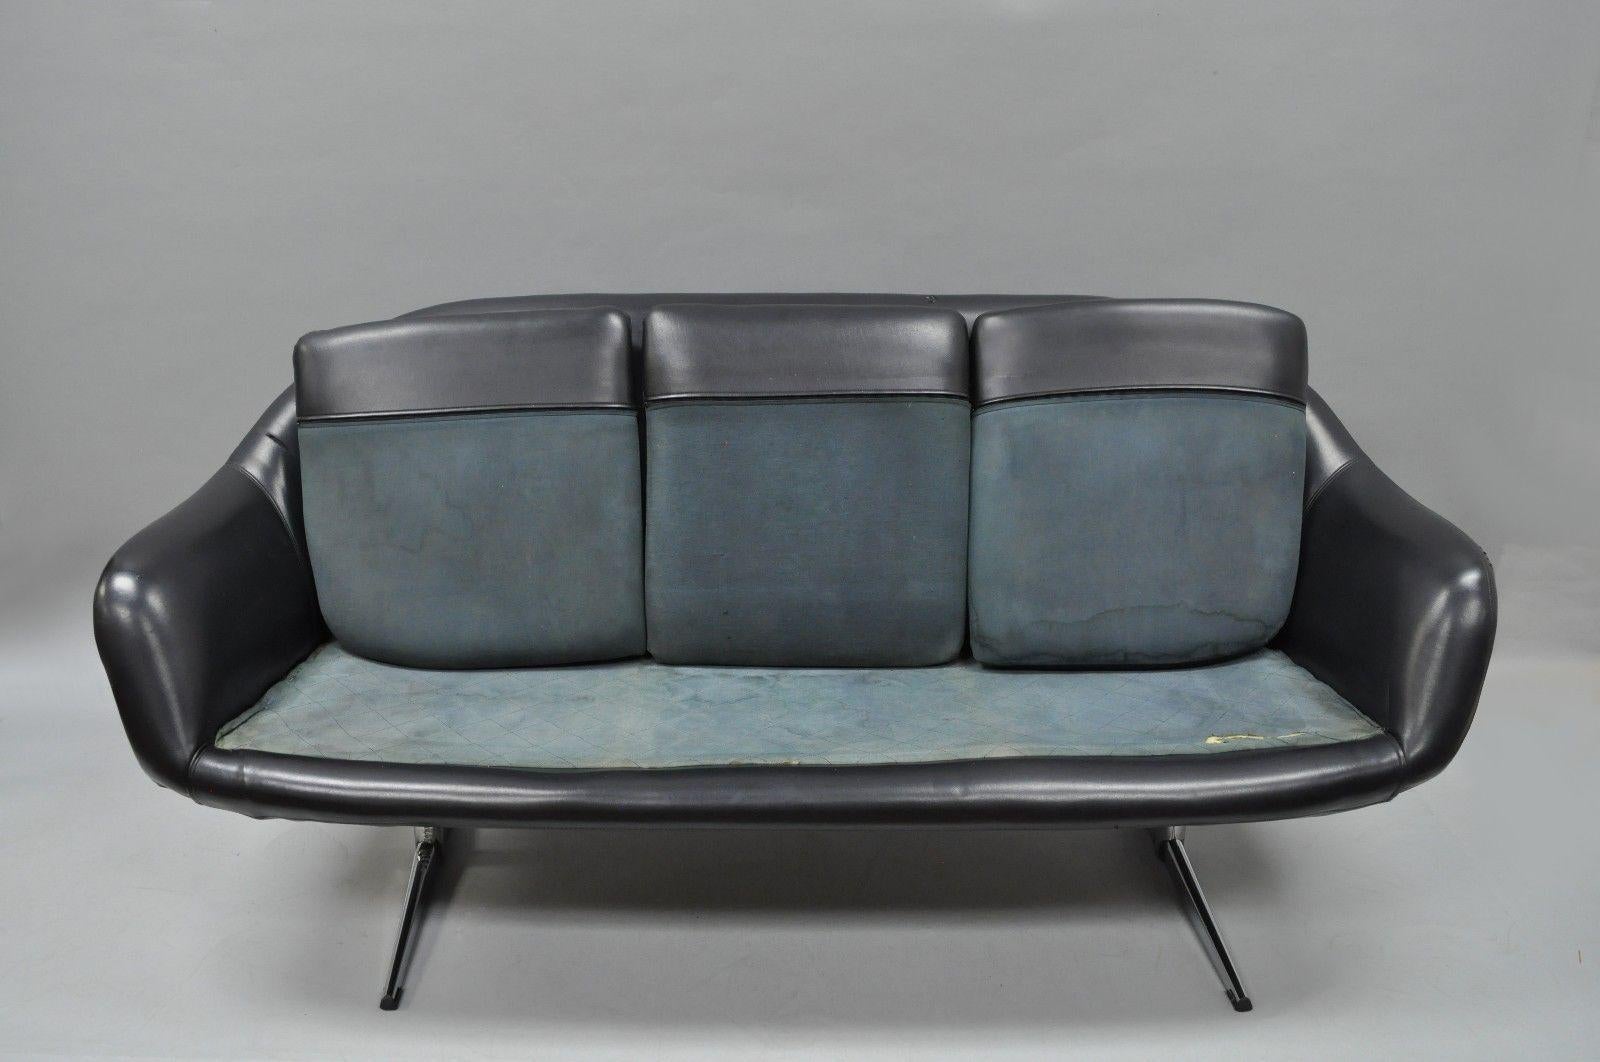 Naugahyde Overman Roto Style Pod Sofa Loveseat Chair Black Viny Mid-Century Modern